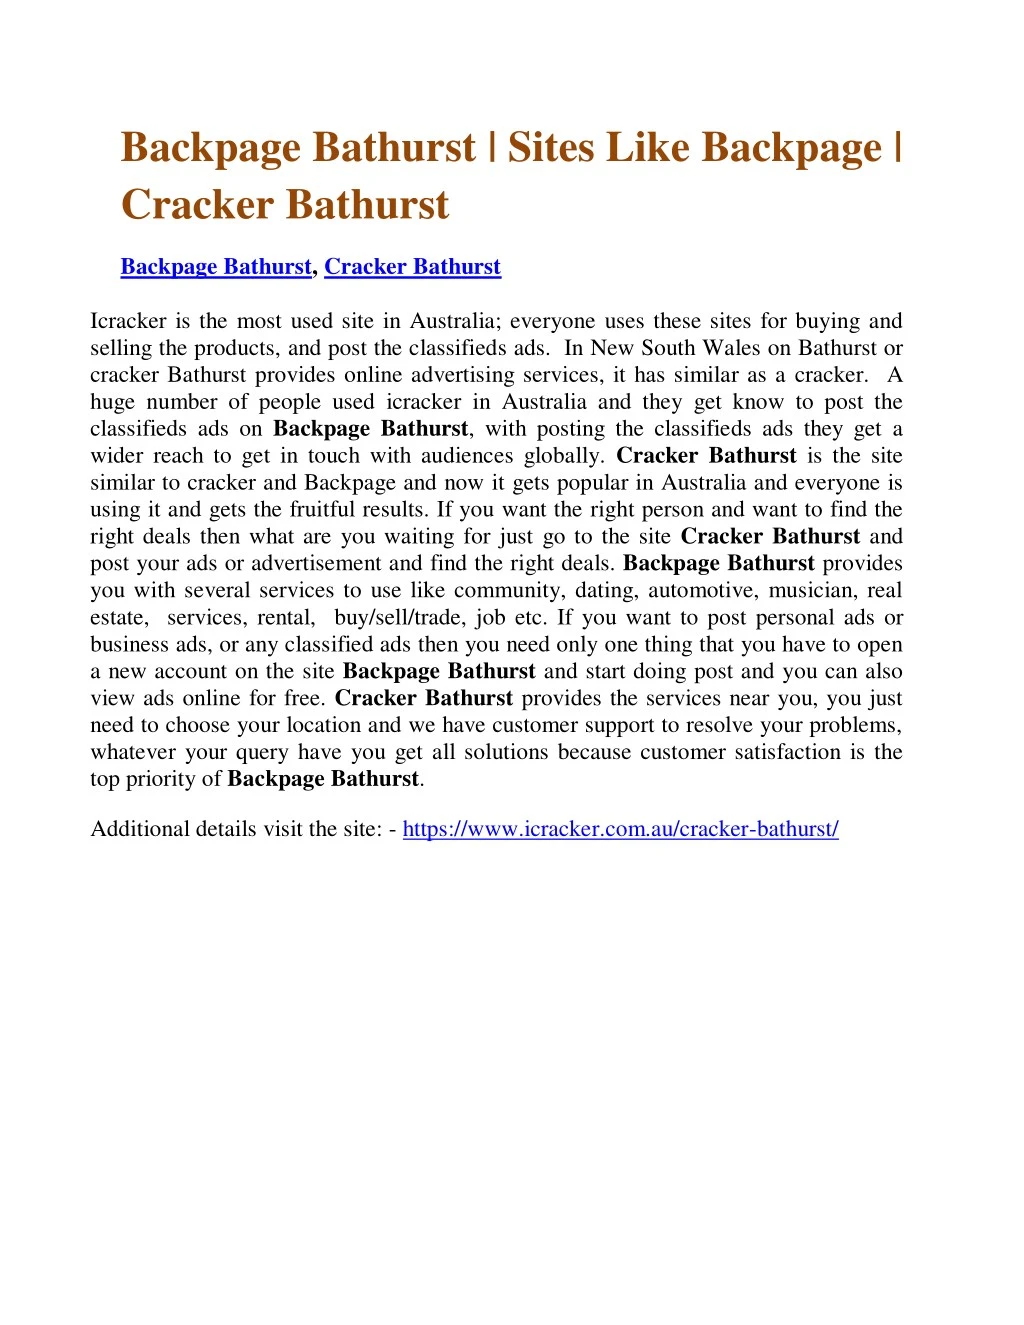 backpage bathurst sites like backpage cracker